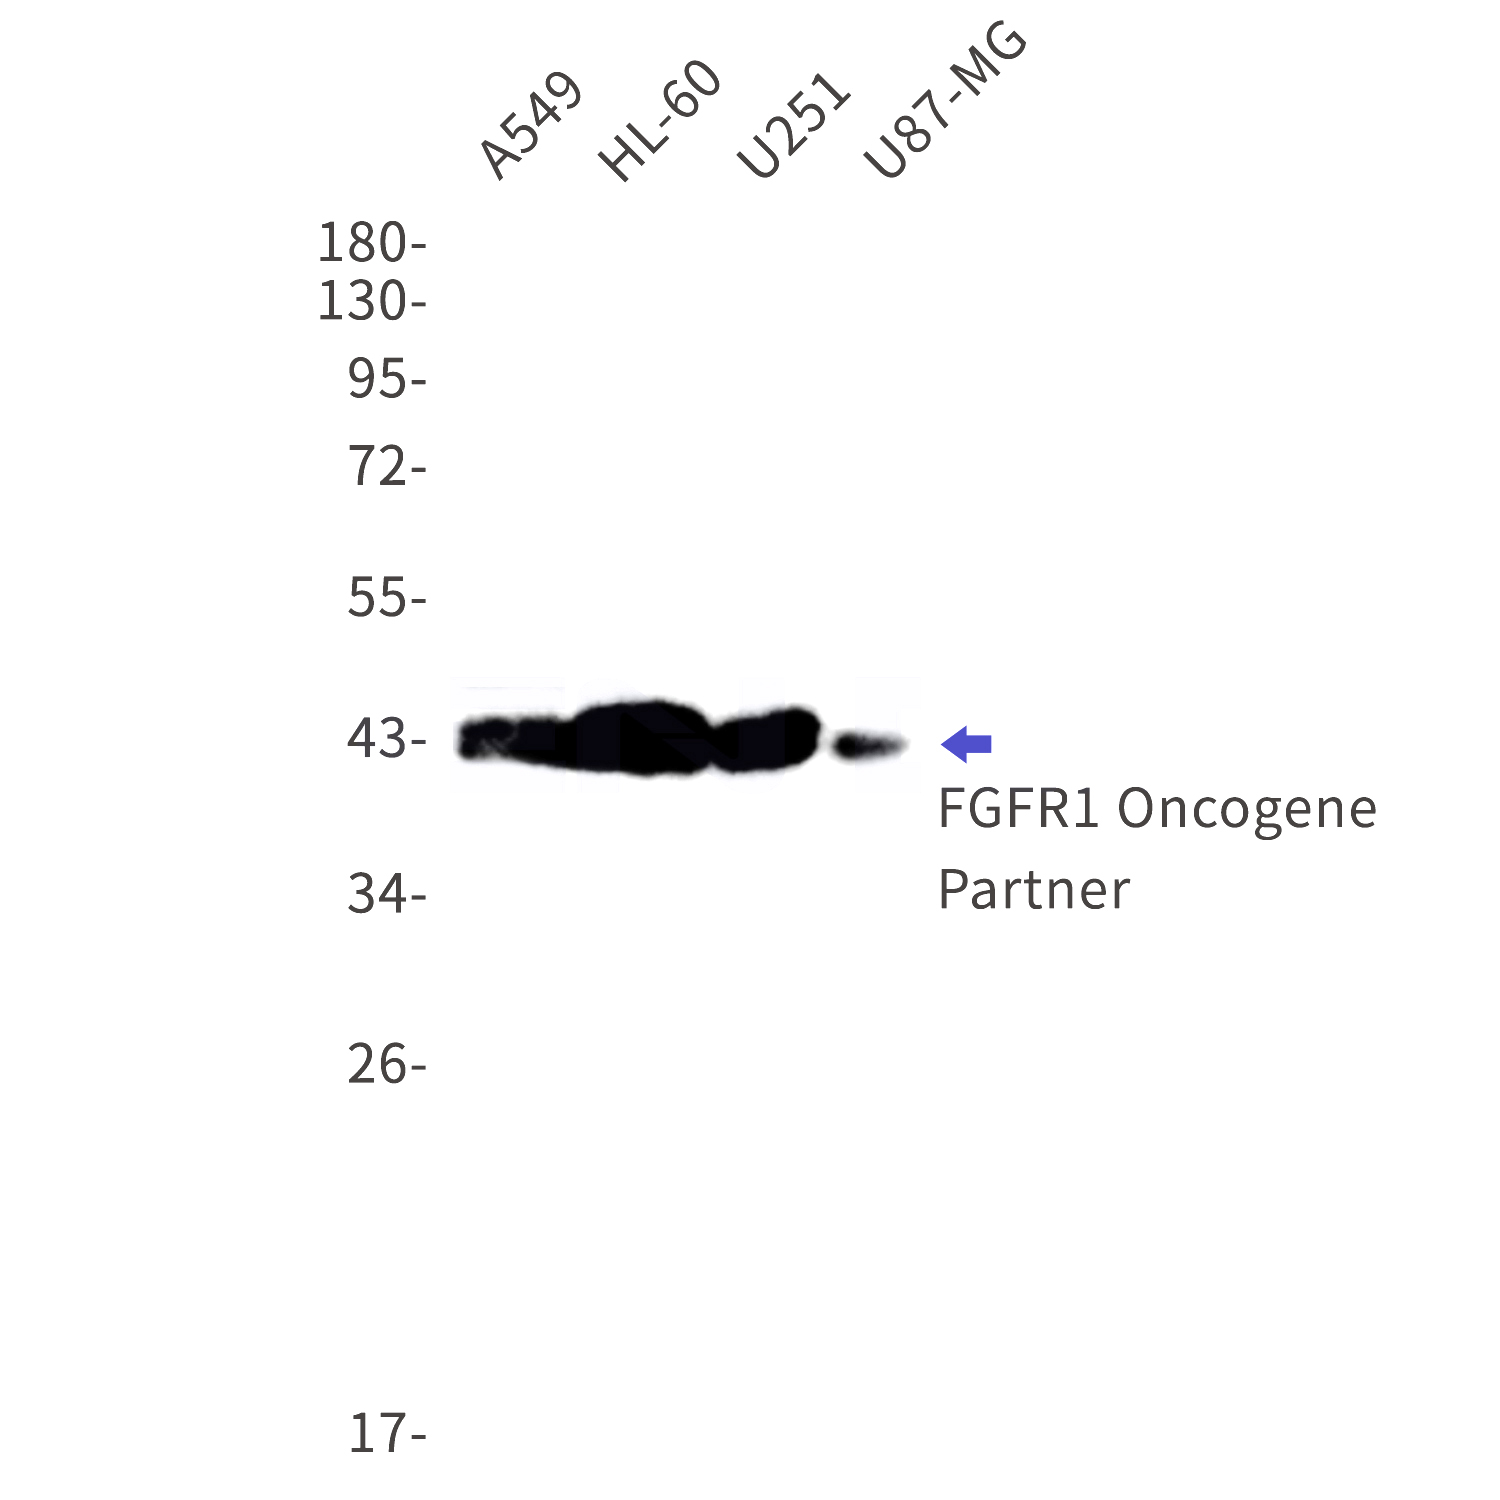 Western blot detection of FGFR1 Oncogene Partner in A549,HL-60,U251,U87-MG cell lysates using FGFR1 Oncogene Partner Rabbit mAb(1:1000 diluted).Predicted band size:43kDa.Observed band size:43kDa.